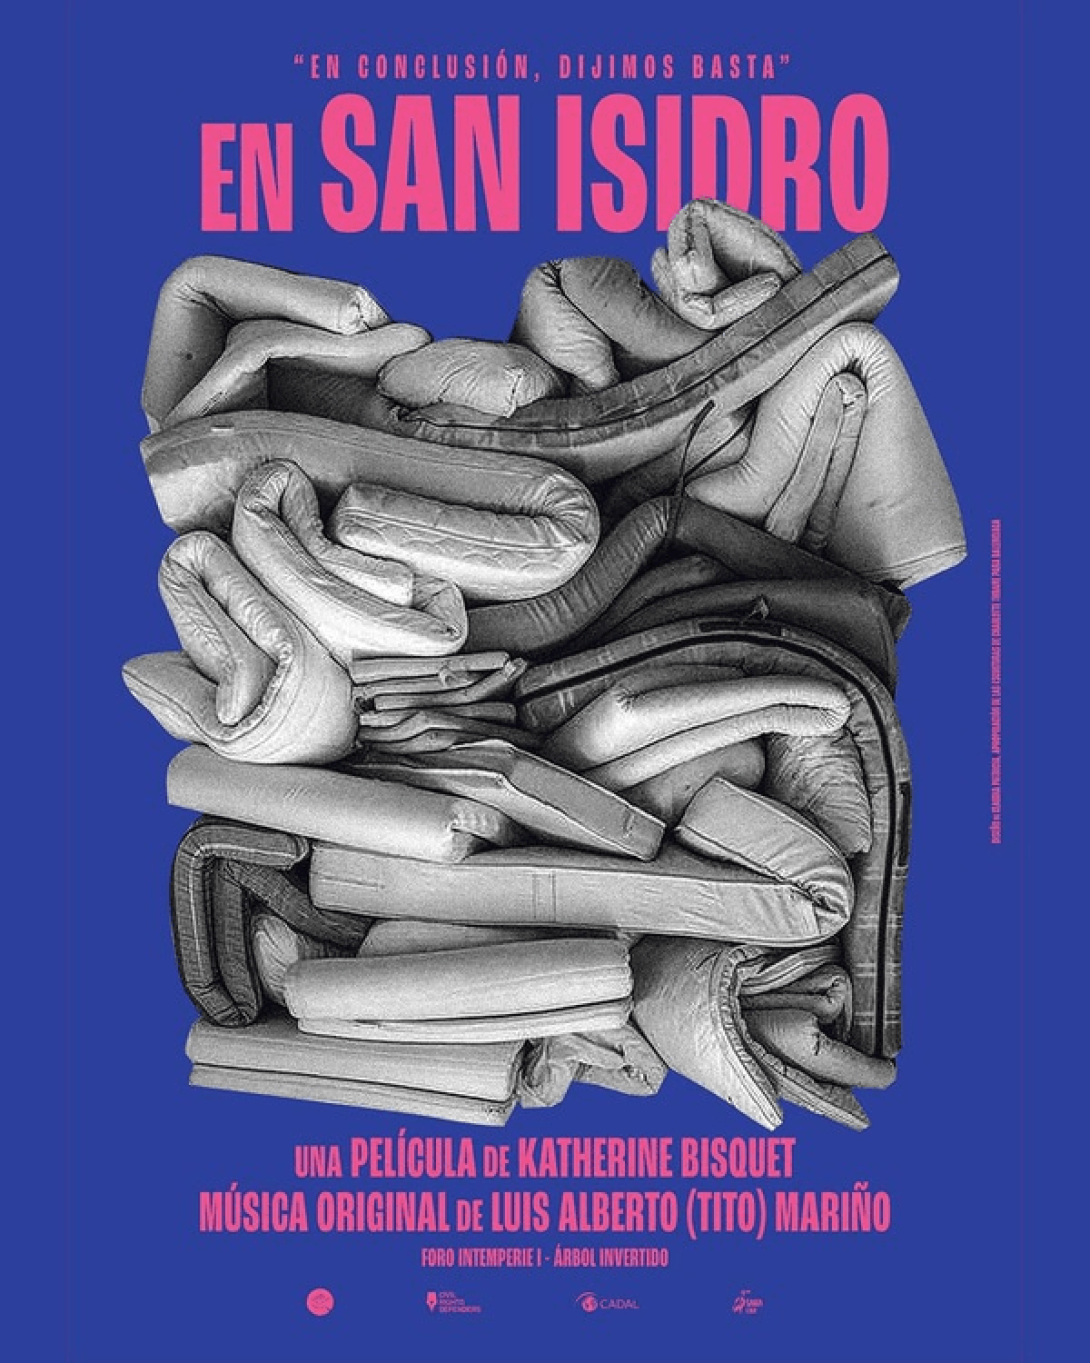 Cartel del documental "En San Isidro".